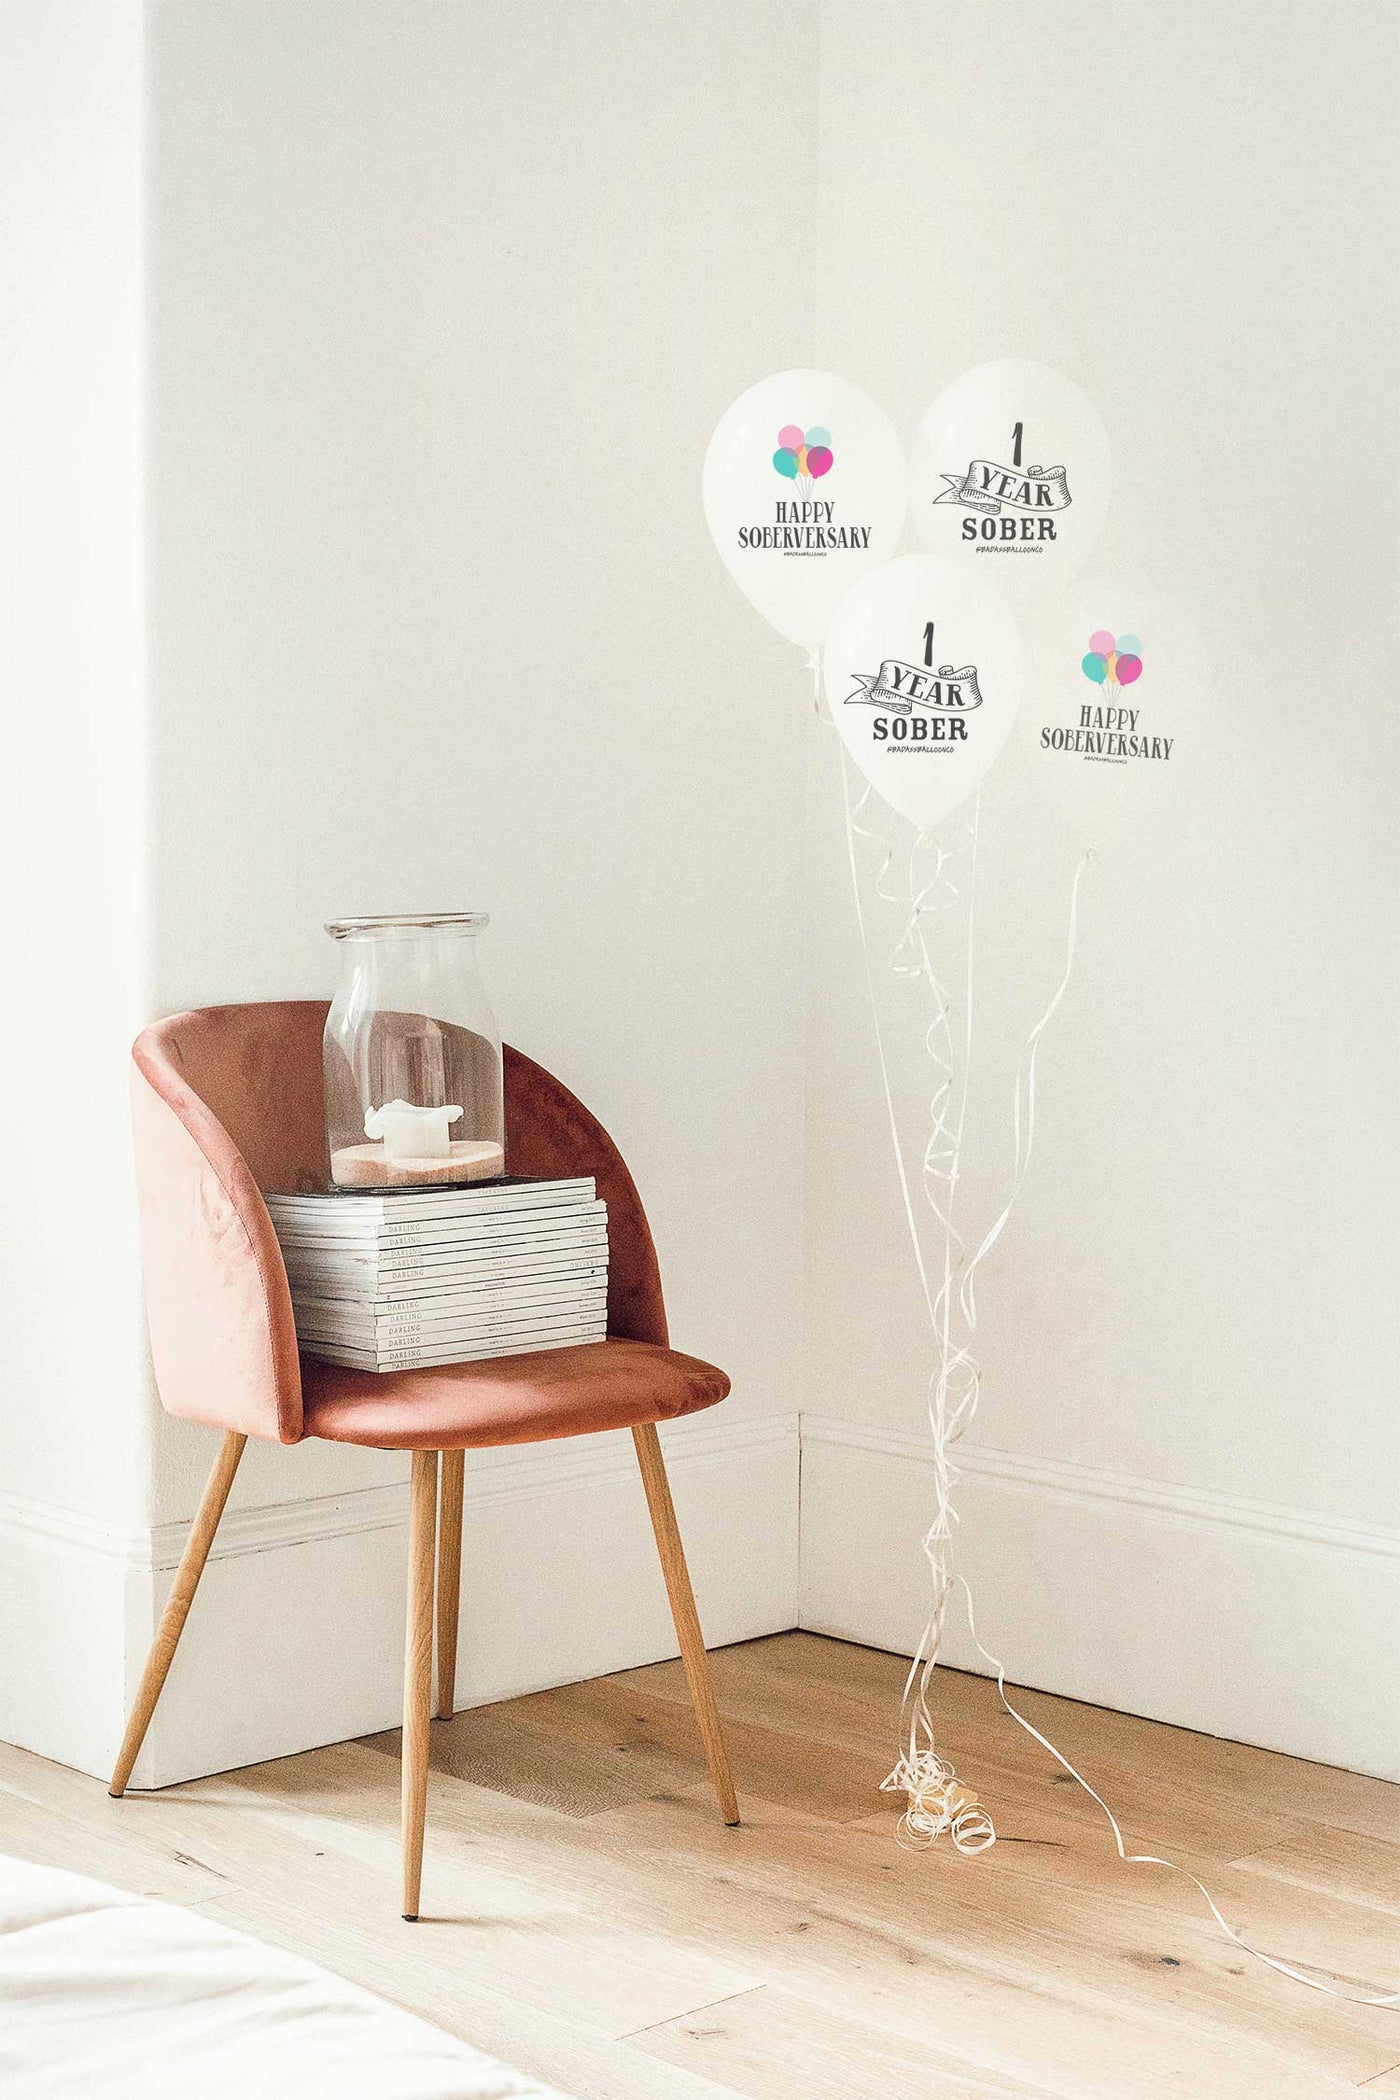 1 year Sober | Soberversary Balloons